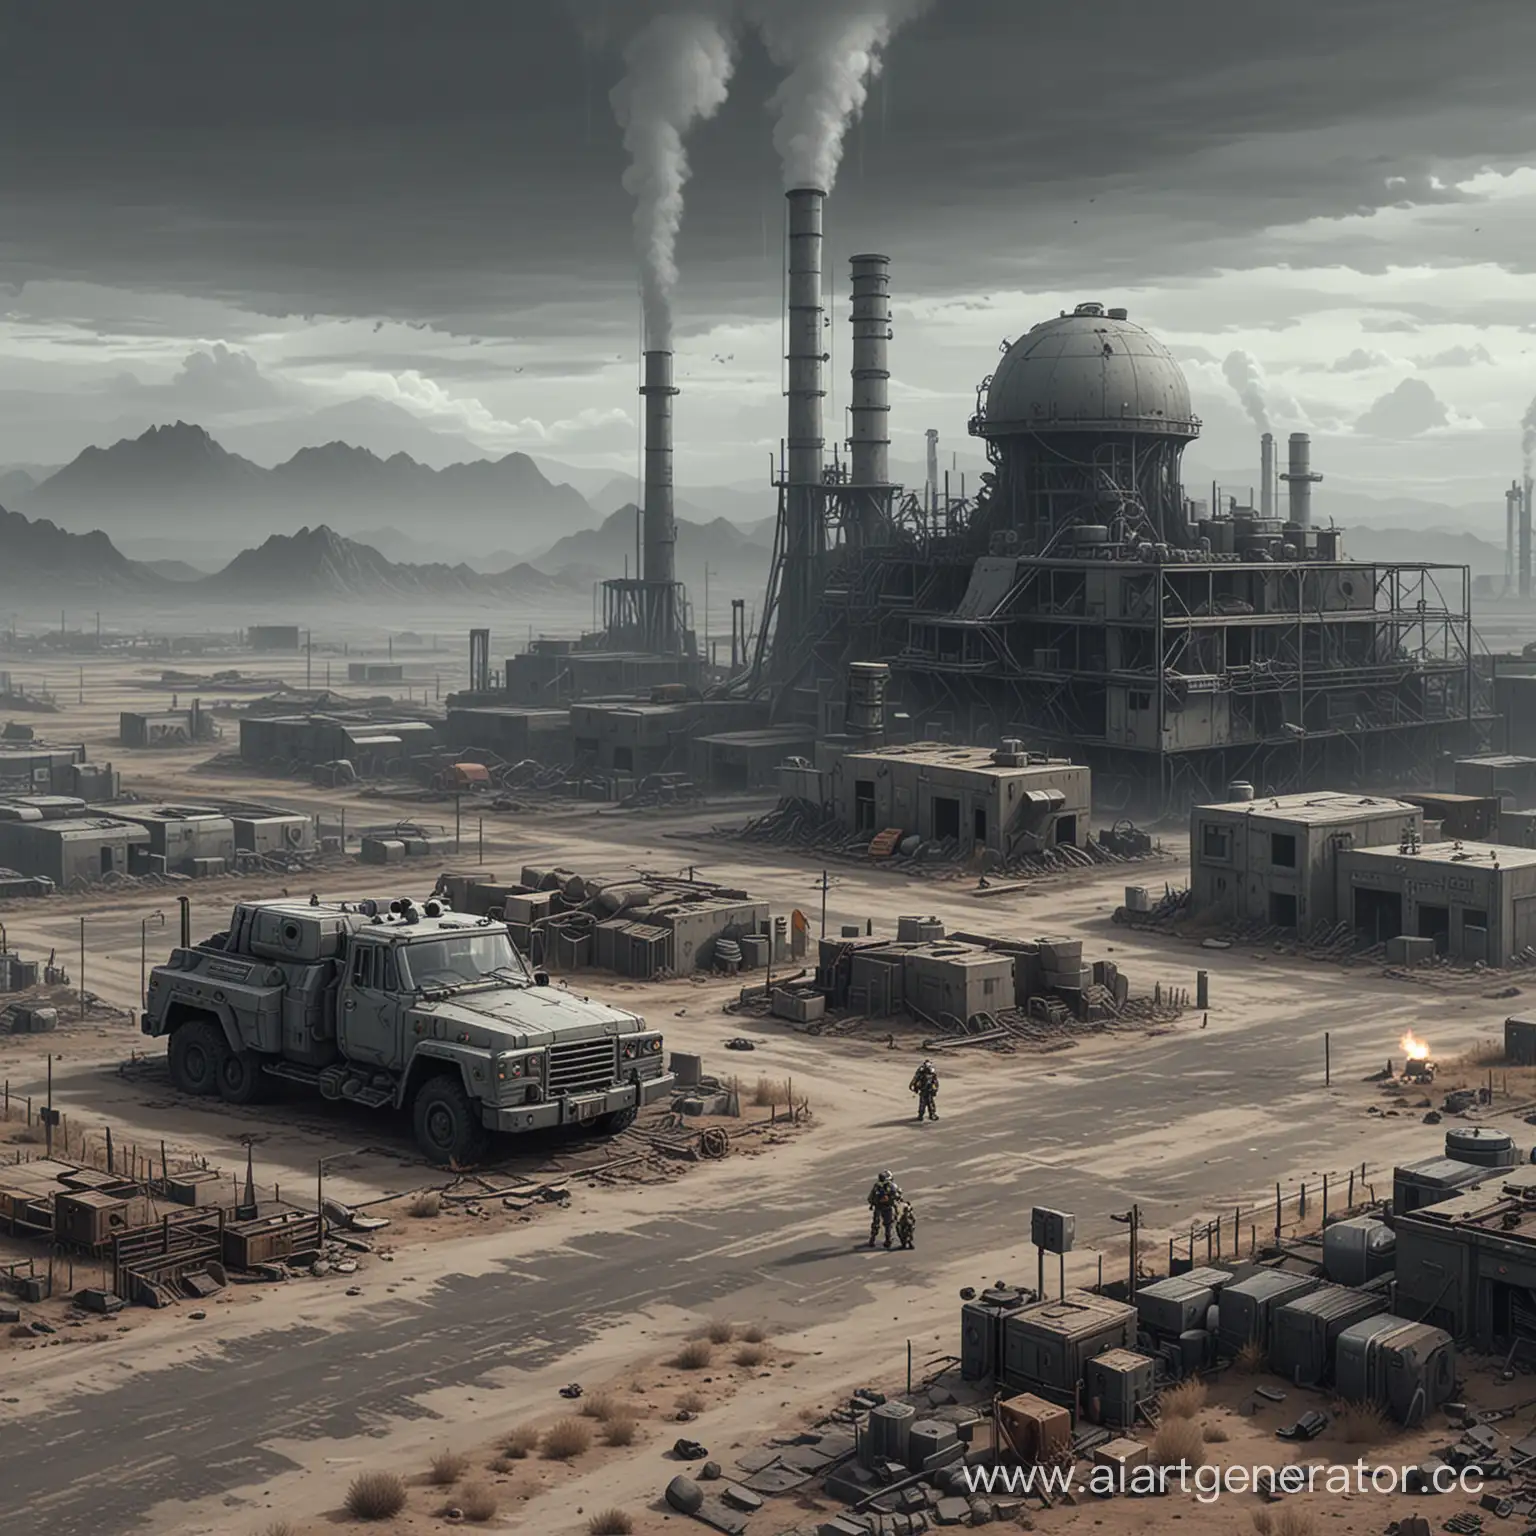 Desolate-Nuclear-Wasteland-Pixel-Art-Greyish-Dystopian-Landscape